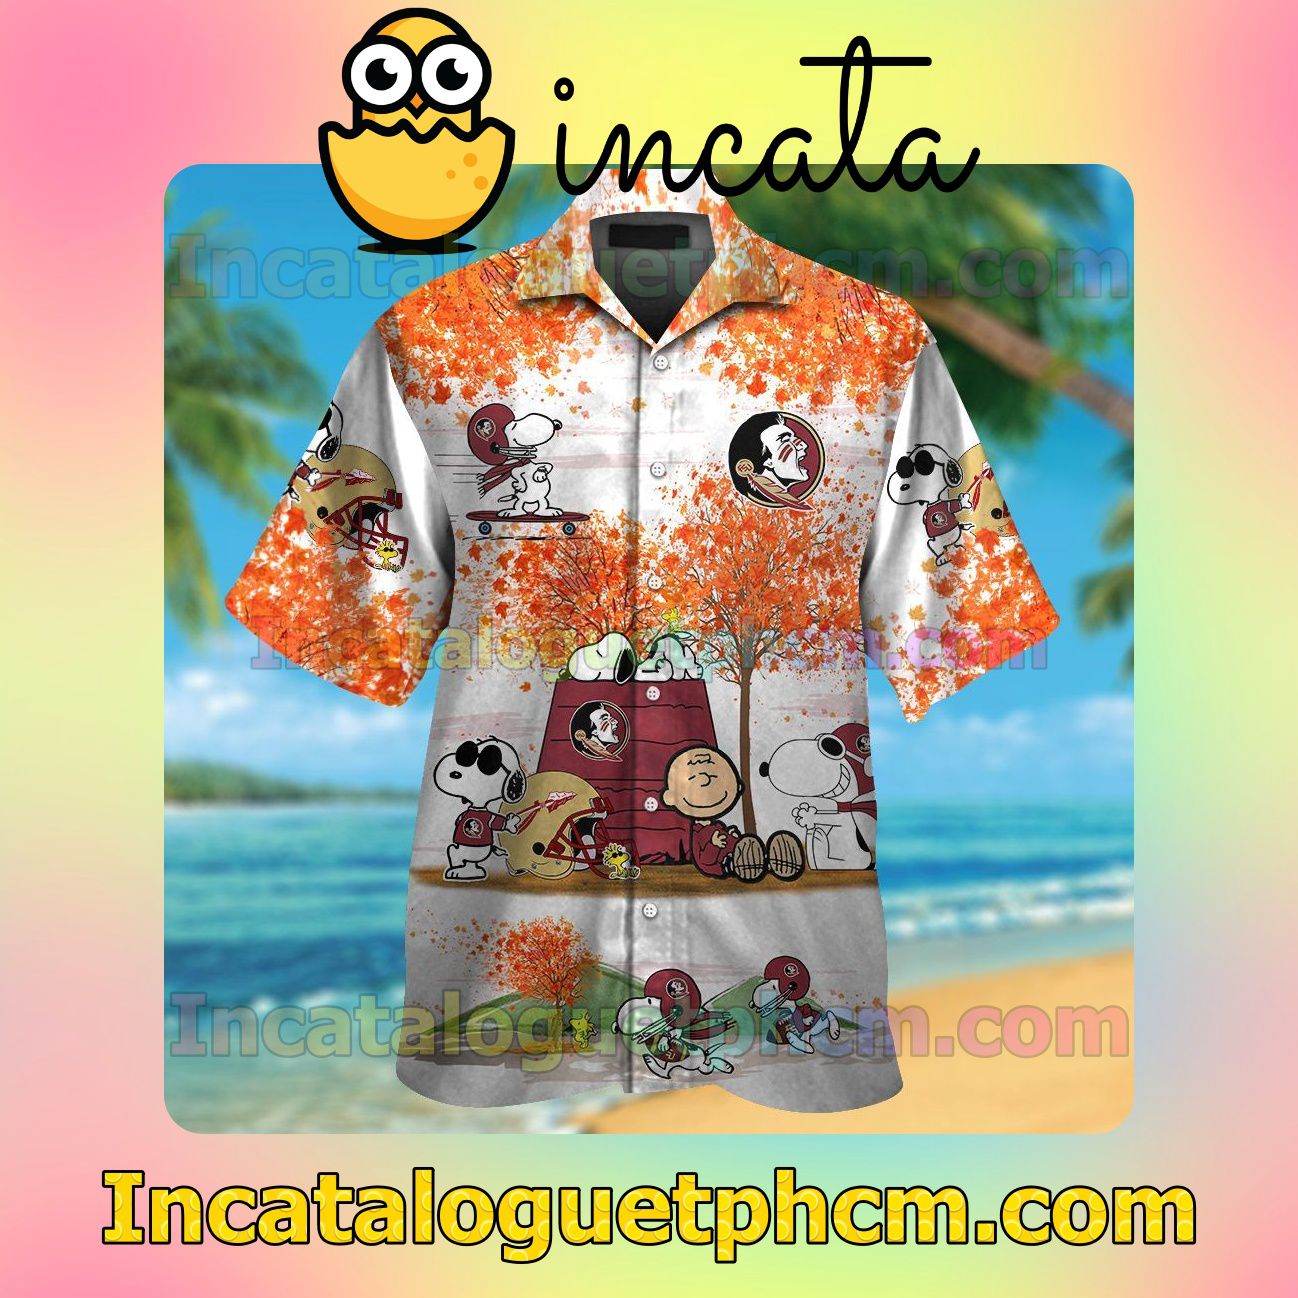 Florida State Seminoles Snoopy Autumn Beach Vacation Shirt, Swim Shorts